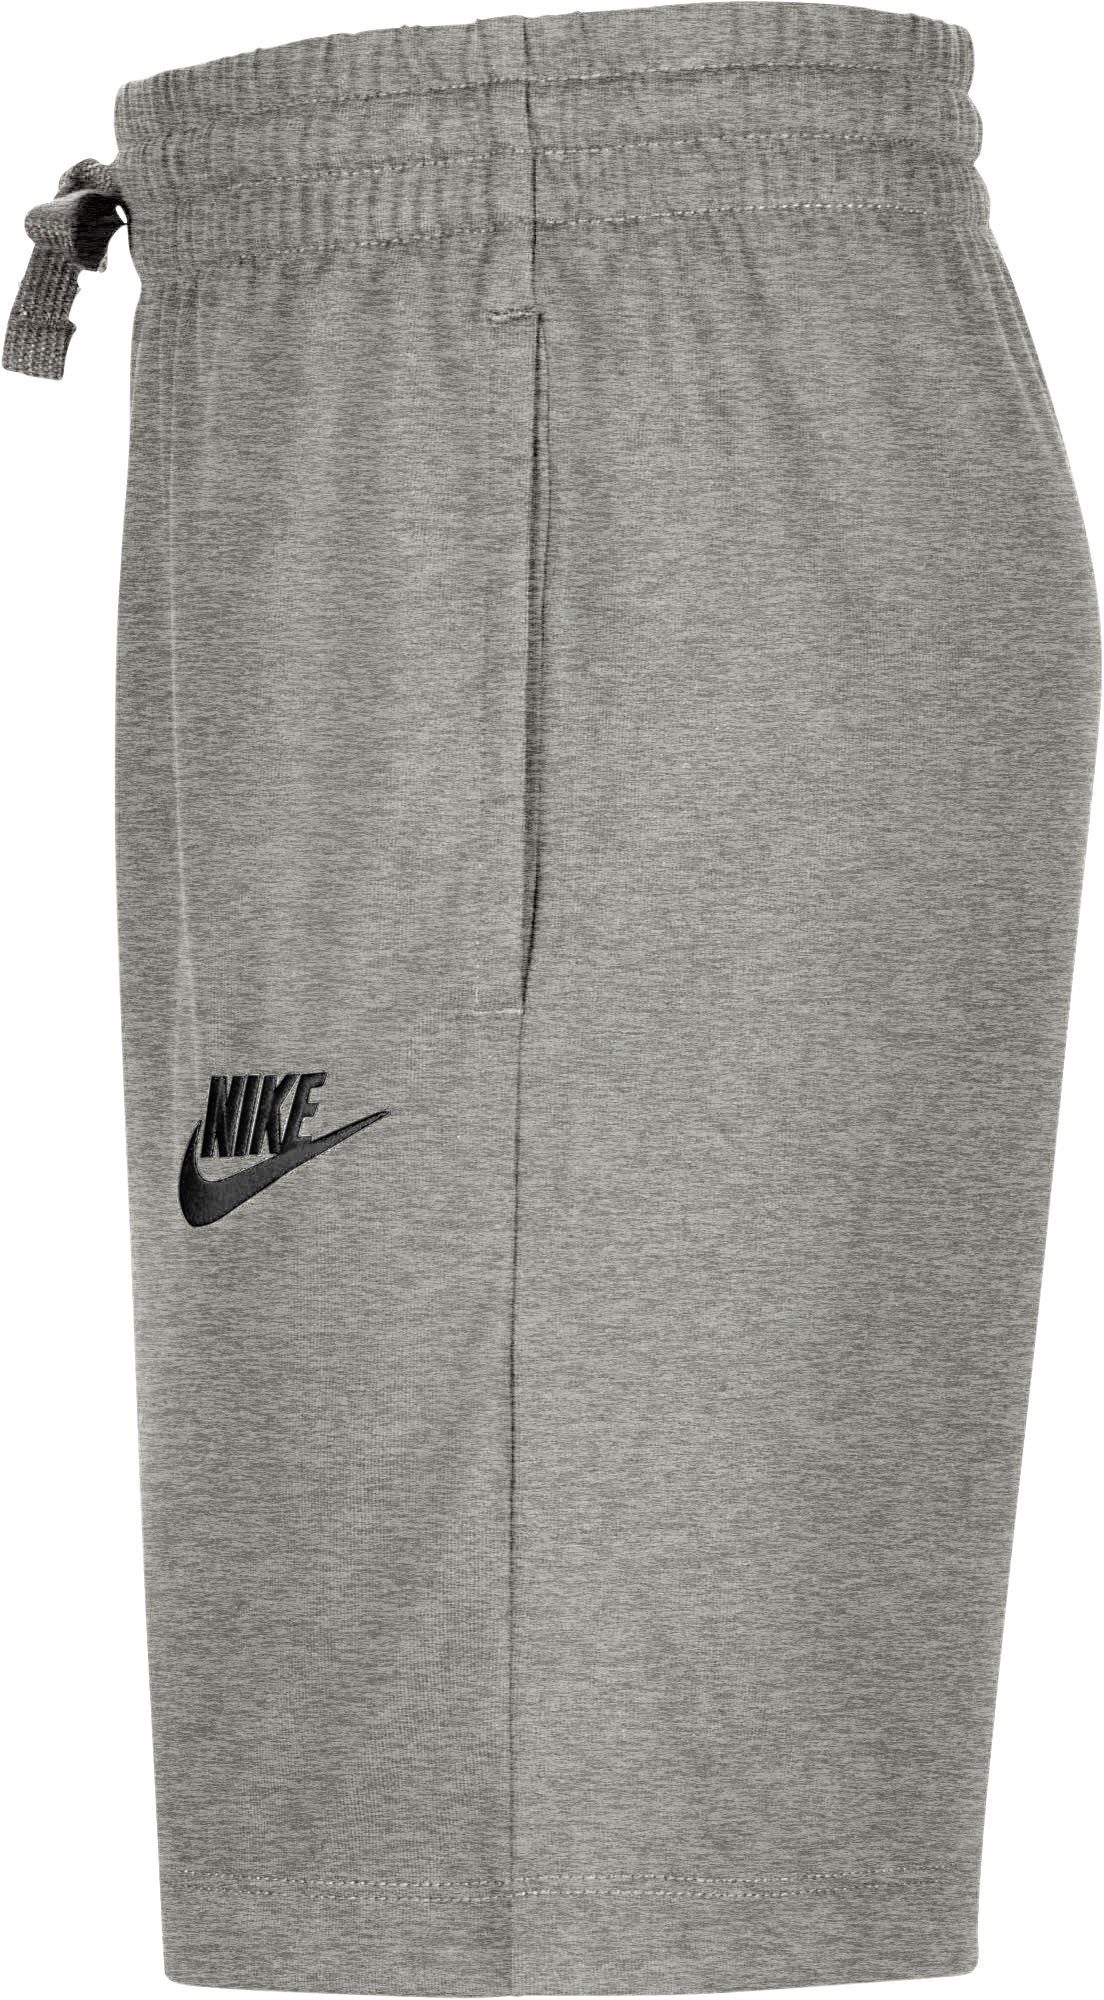 SHORTS Nike Shorts KIDS' (BOYS) JERSEY Sportswear BIG grau